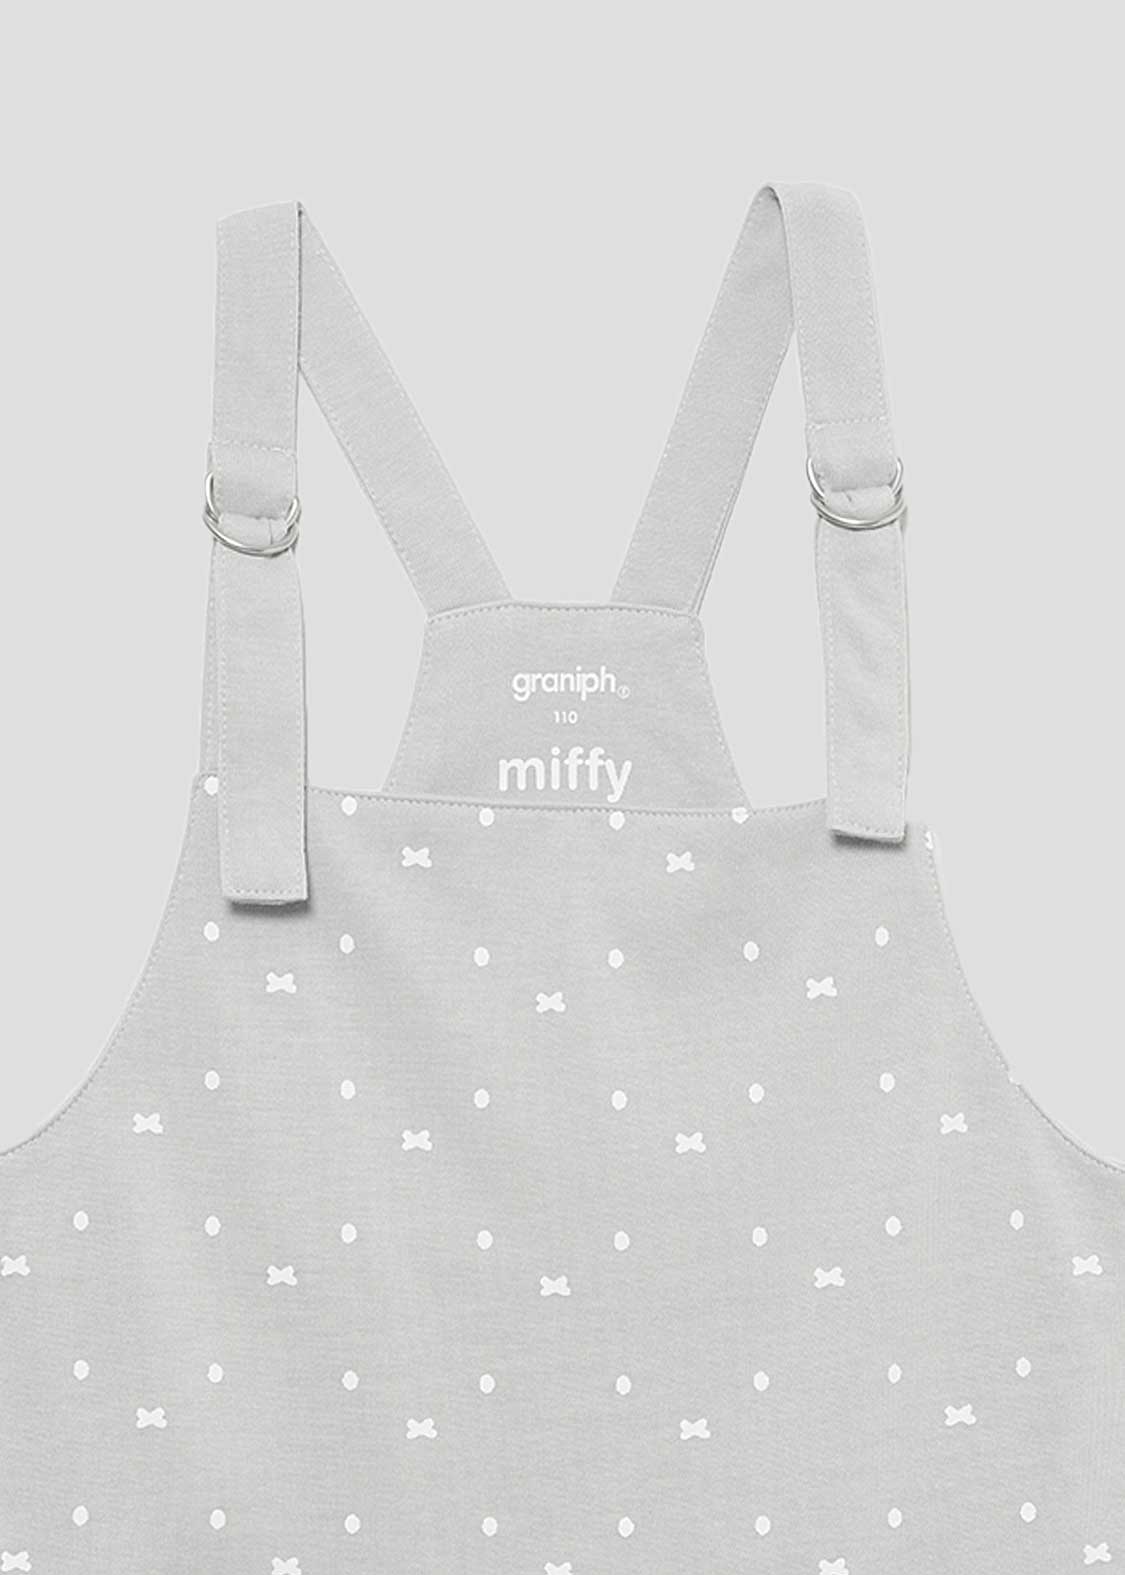 miffy Jumper Skirt (miffy_miffy Zoom Pattern)